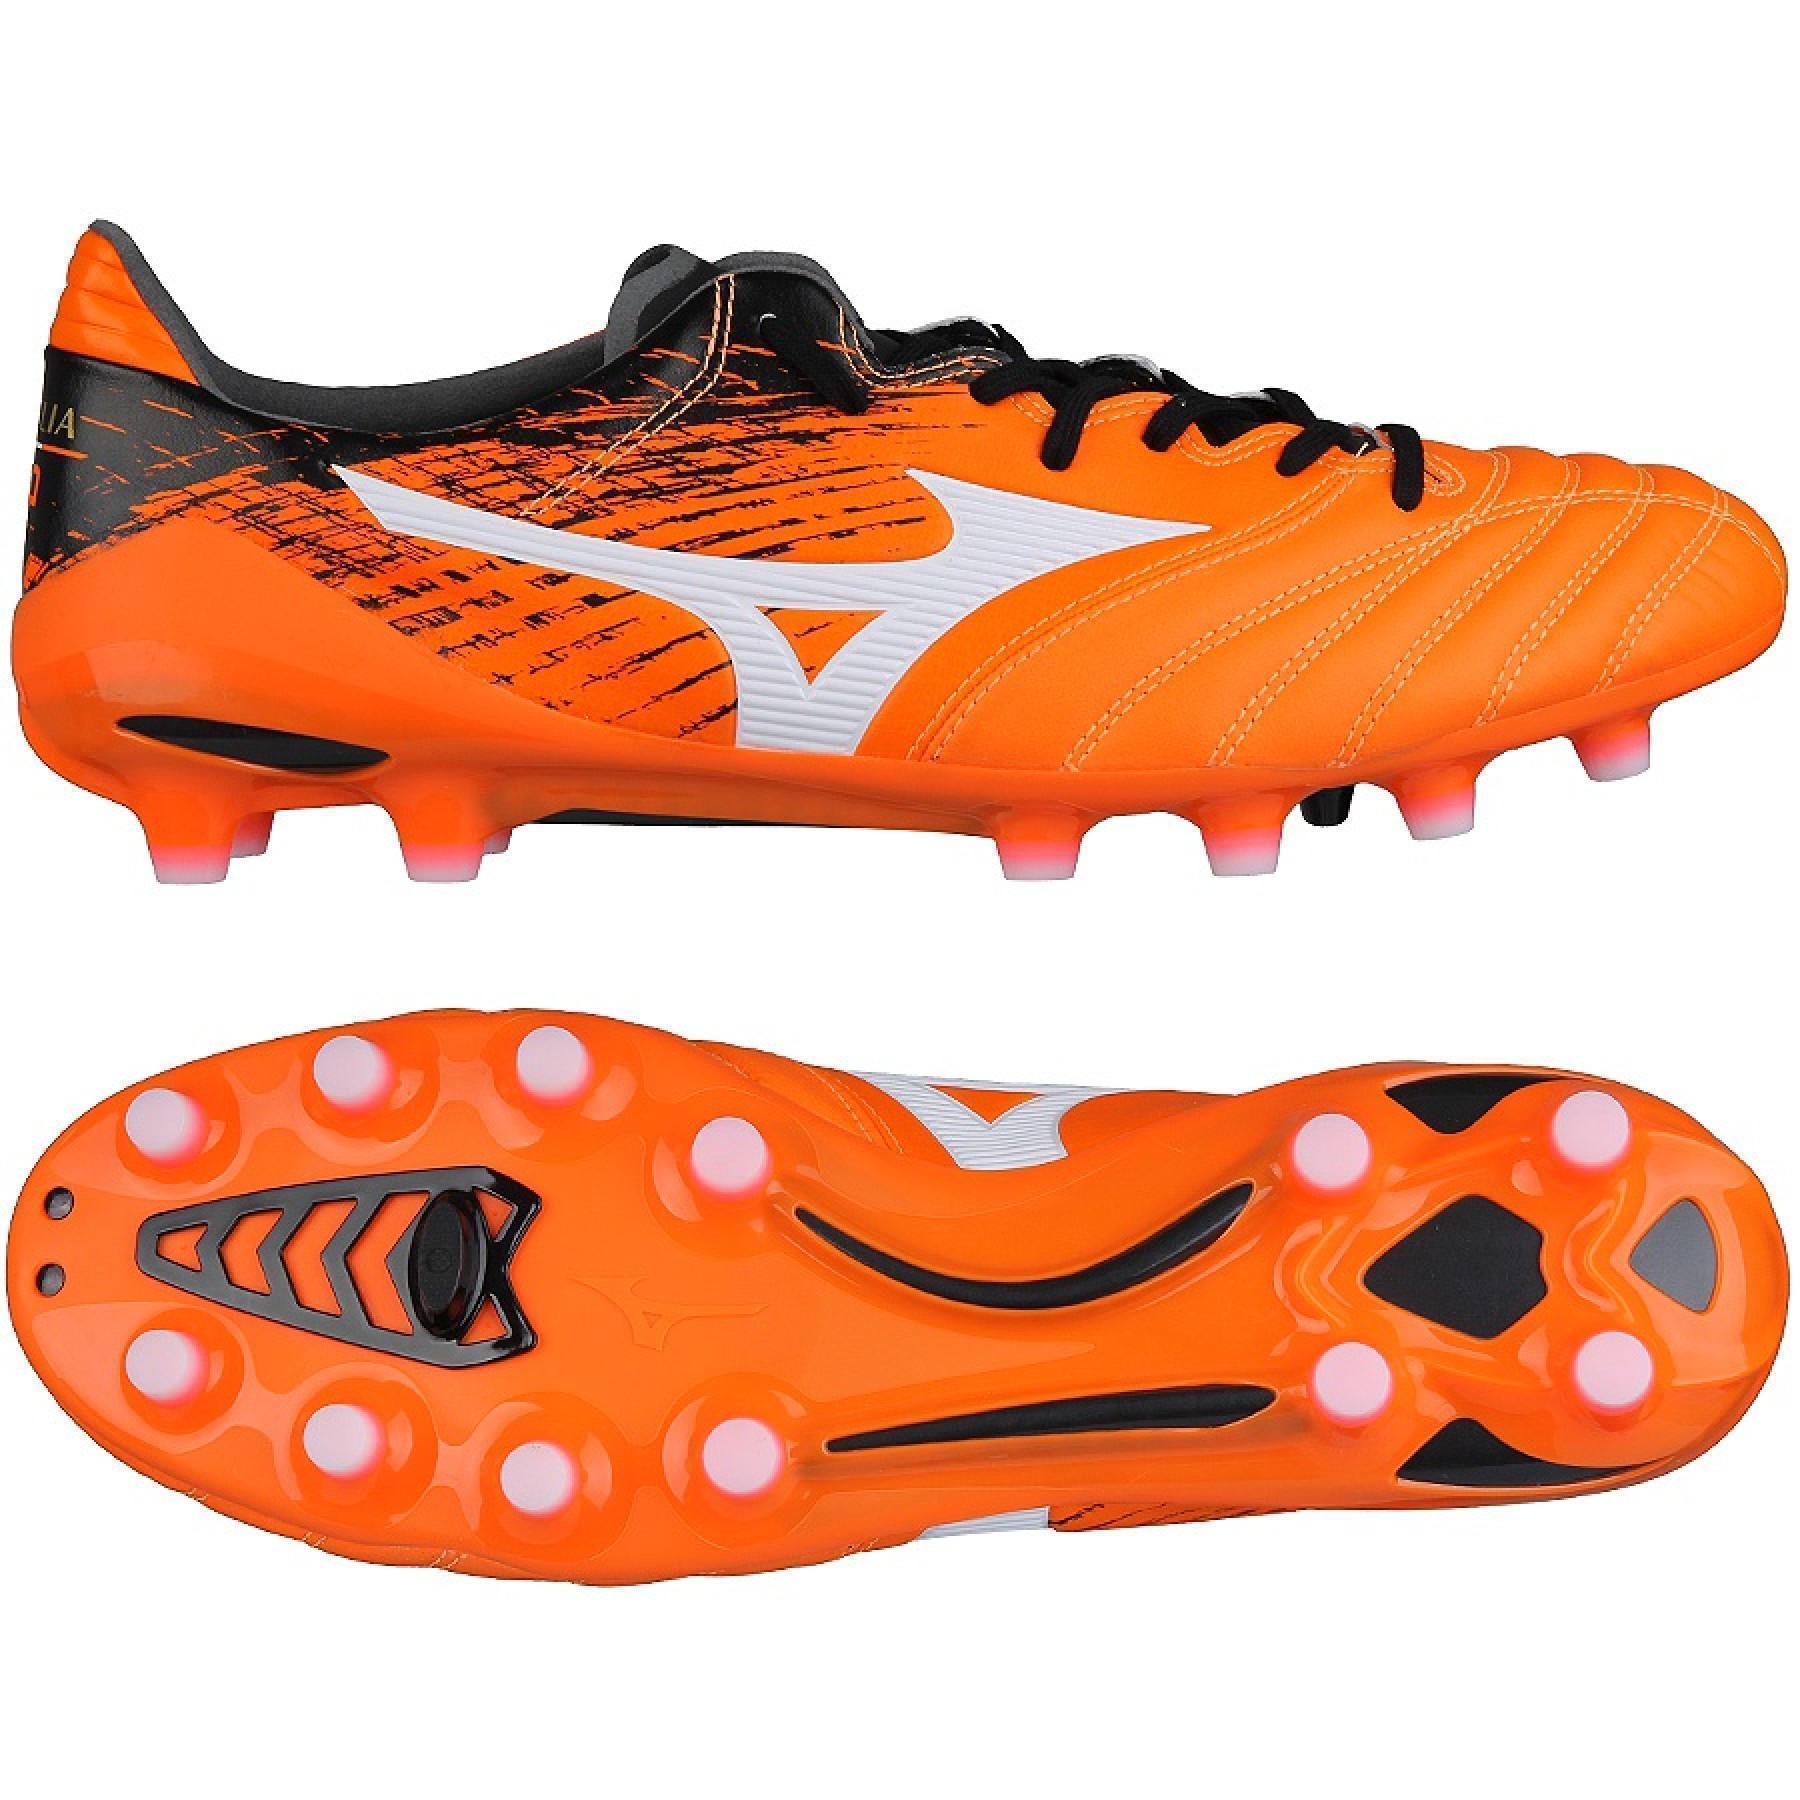 Mizuno Morelia Neo II MD Soccer Cleats Football Shoes Boots P1GA175354 